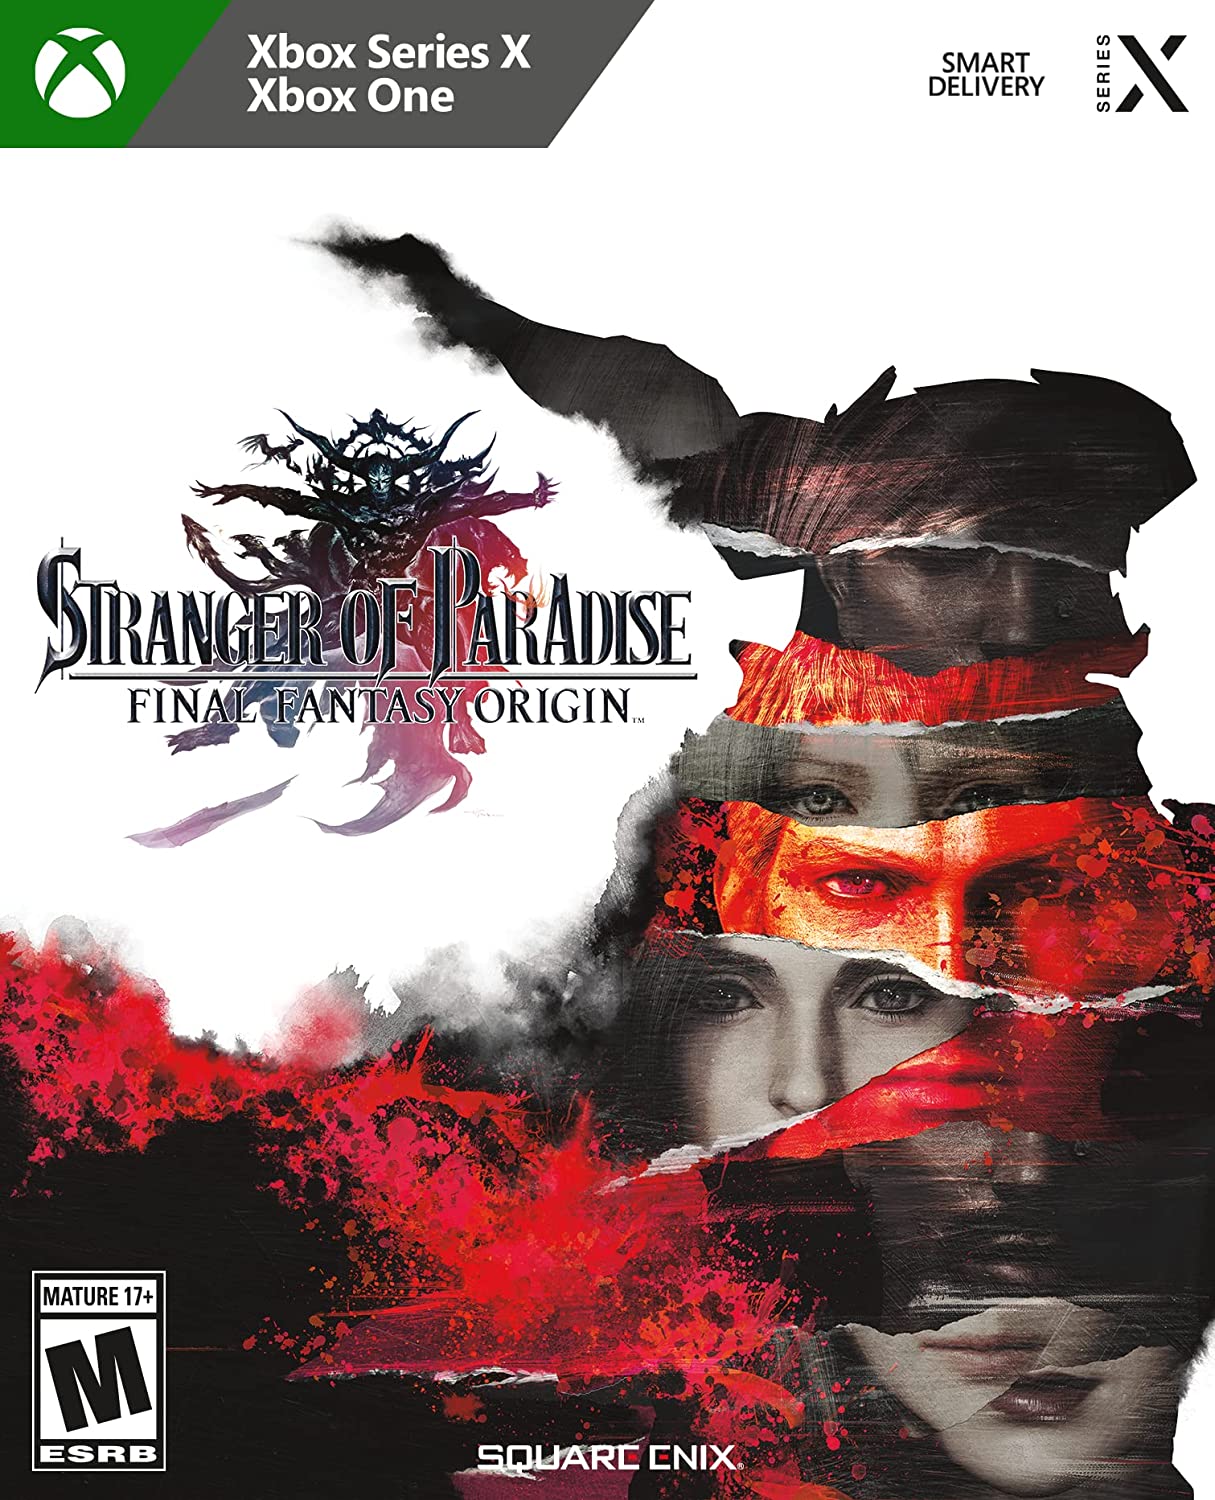 Stranger of Paradise: Final Fantasy Origin - (XSX) Xbox Series X [UNBOXING] Video Games Square Enix   